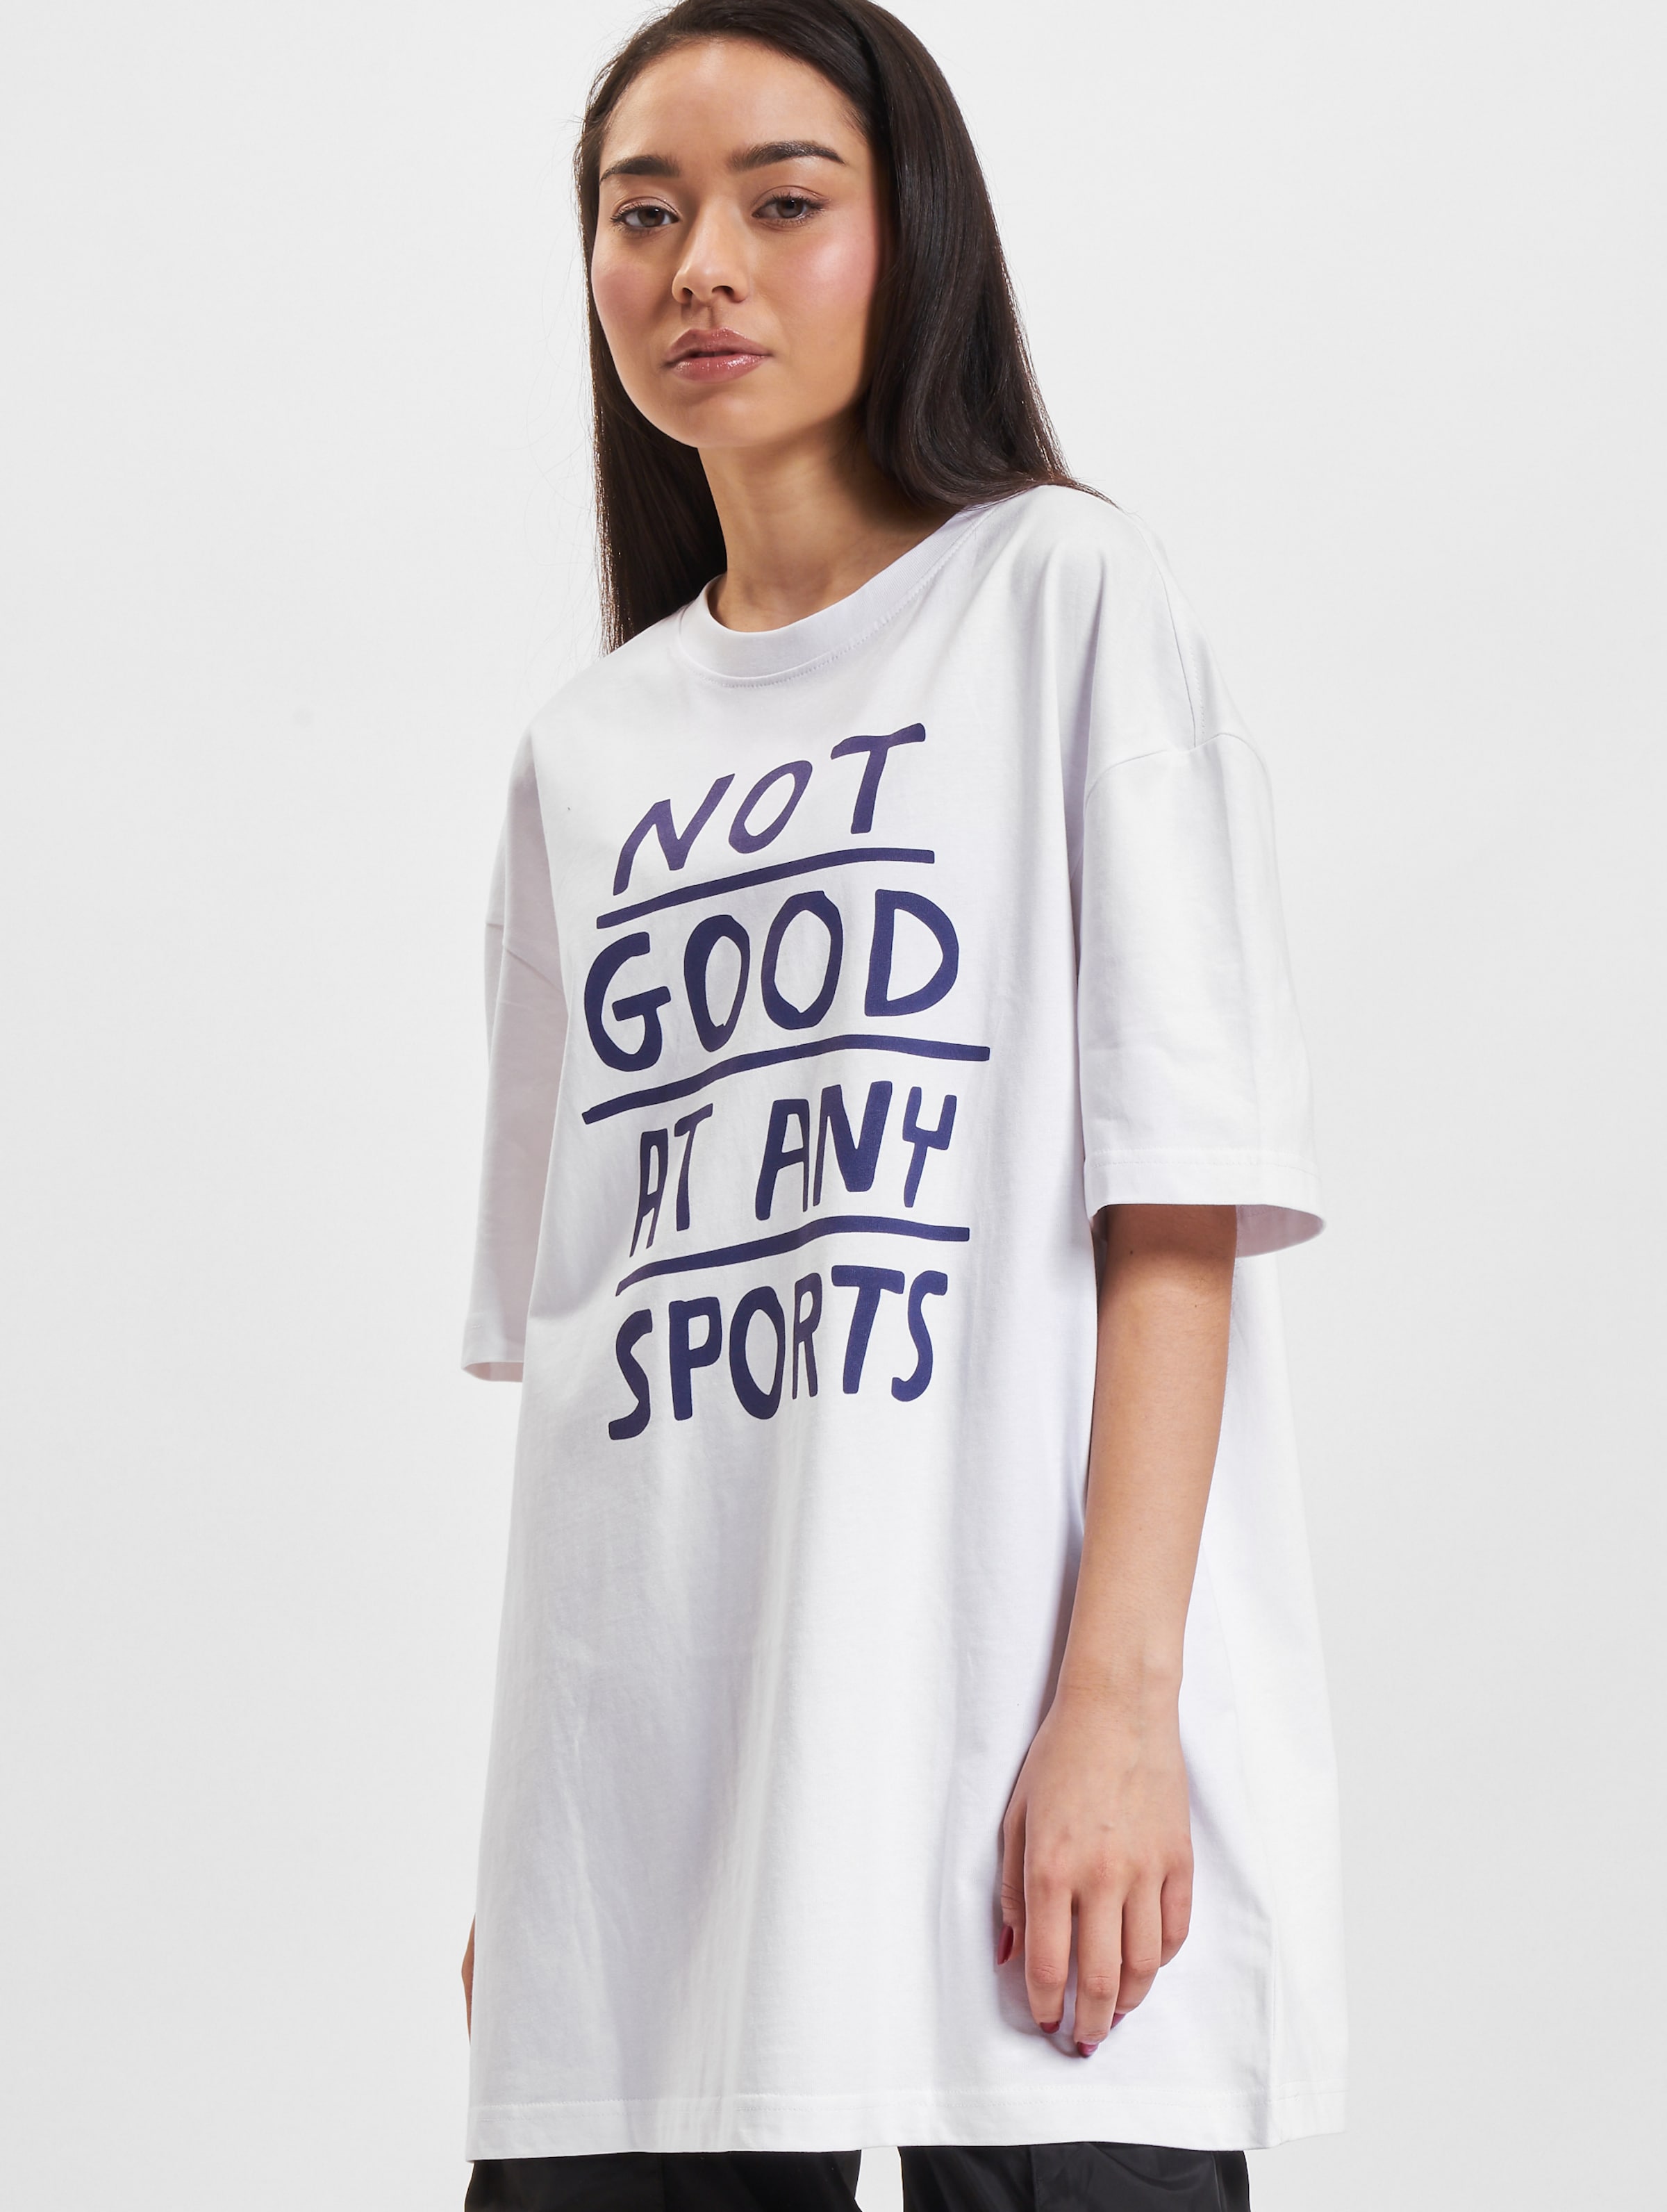 Days Beyond Not Good At Any Sports T-Shirt Vrouwen op kleur wit, Maat XXL